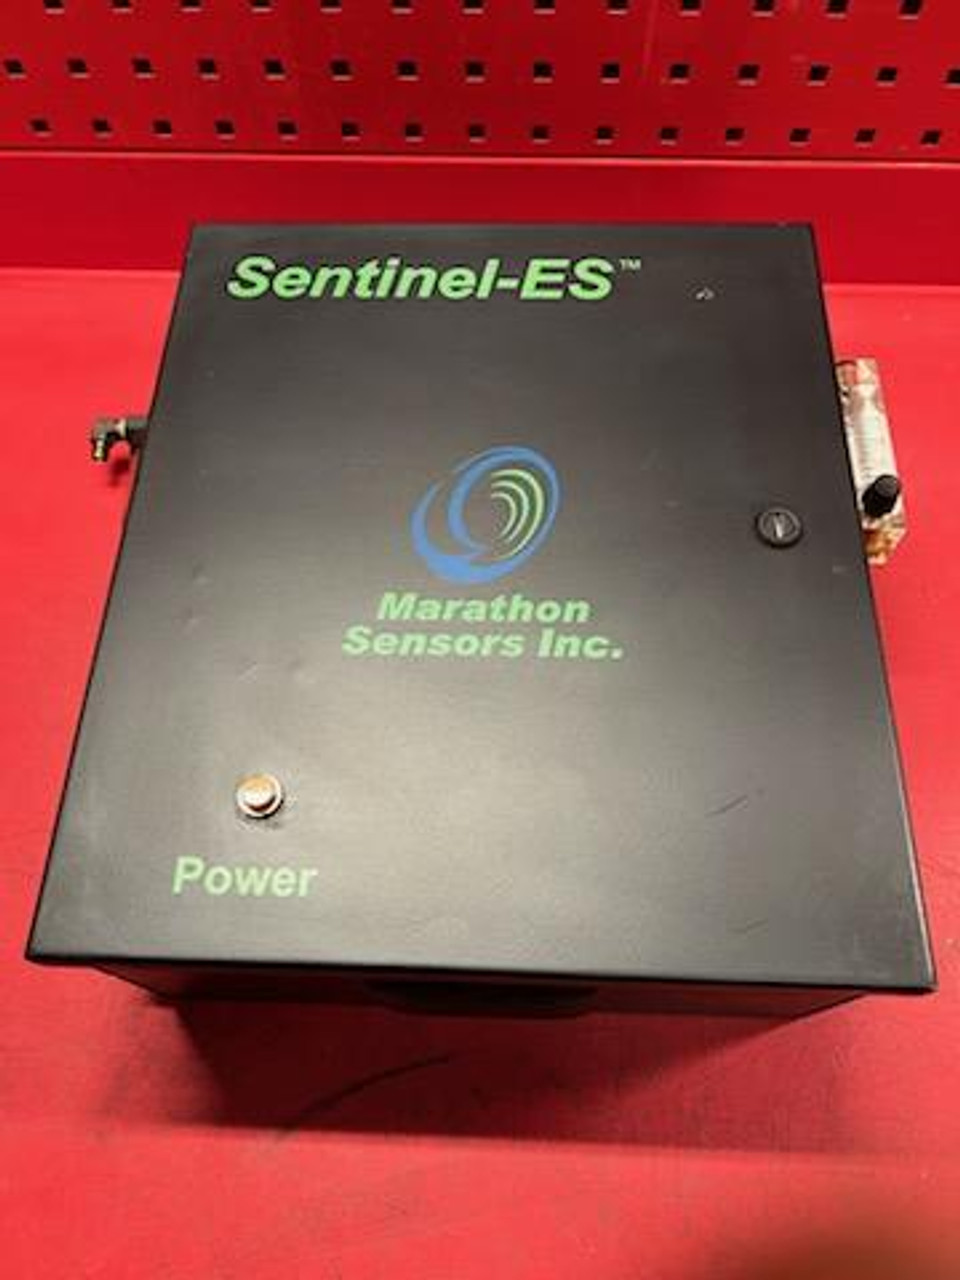 Marathon Sensors Inc, Sentinel-ES